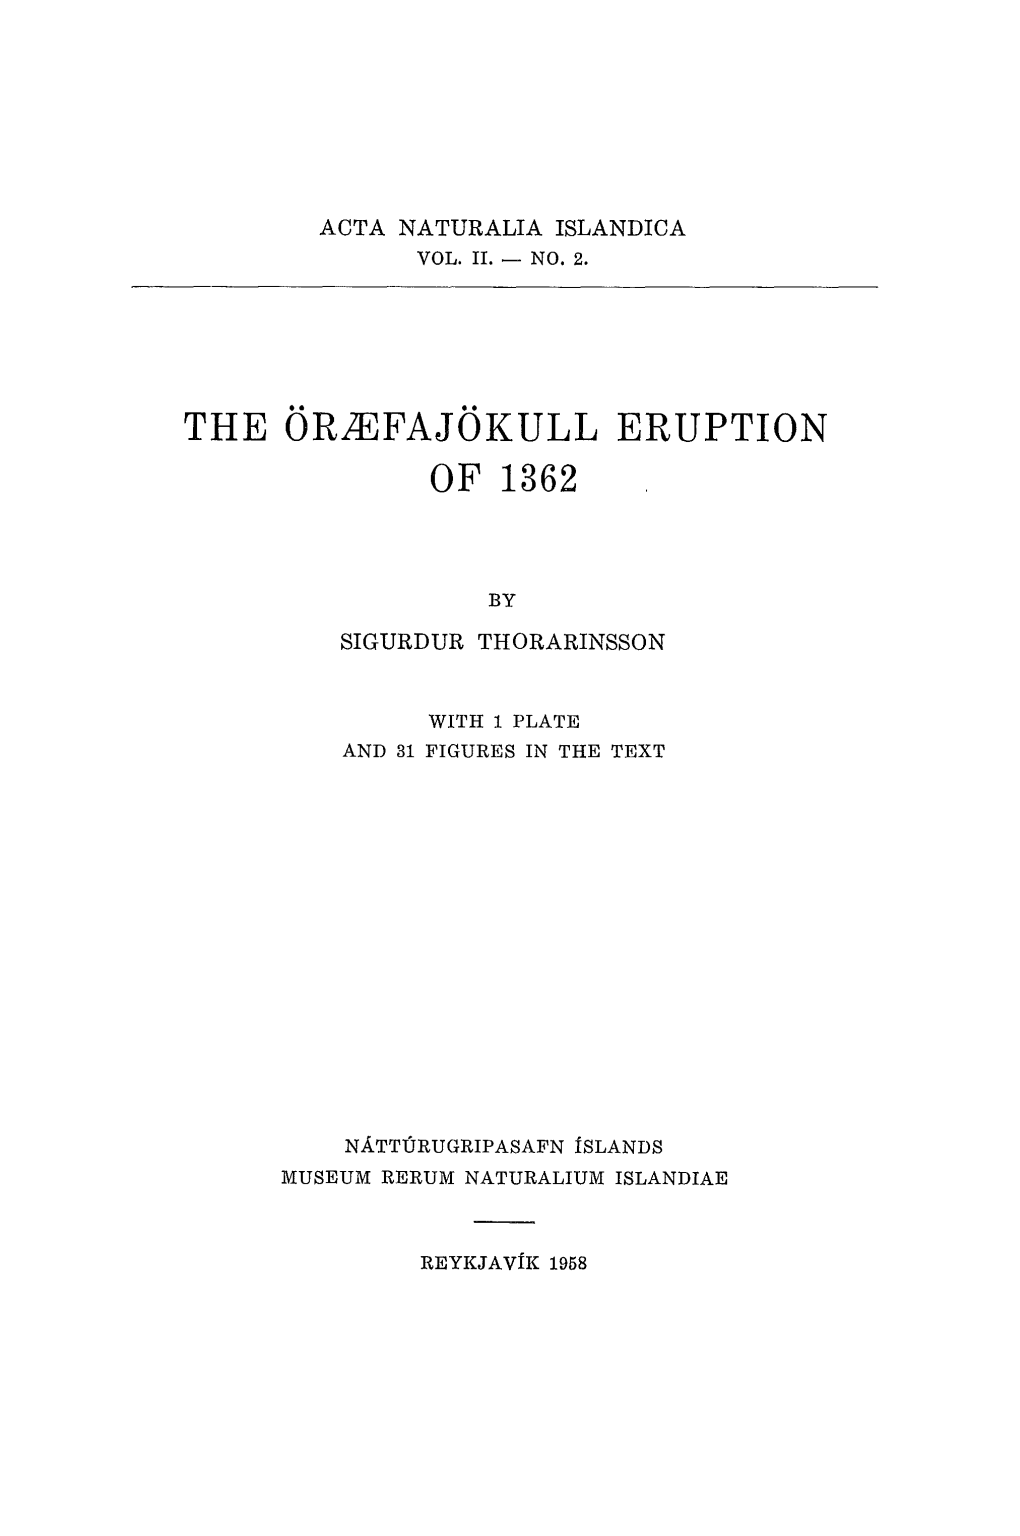 THE Orlefajokull ERUPTION of 1362